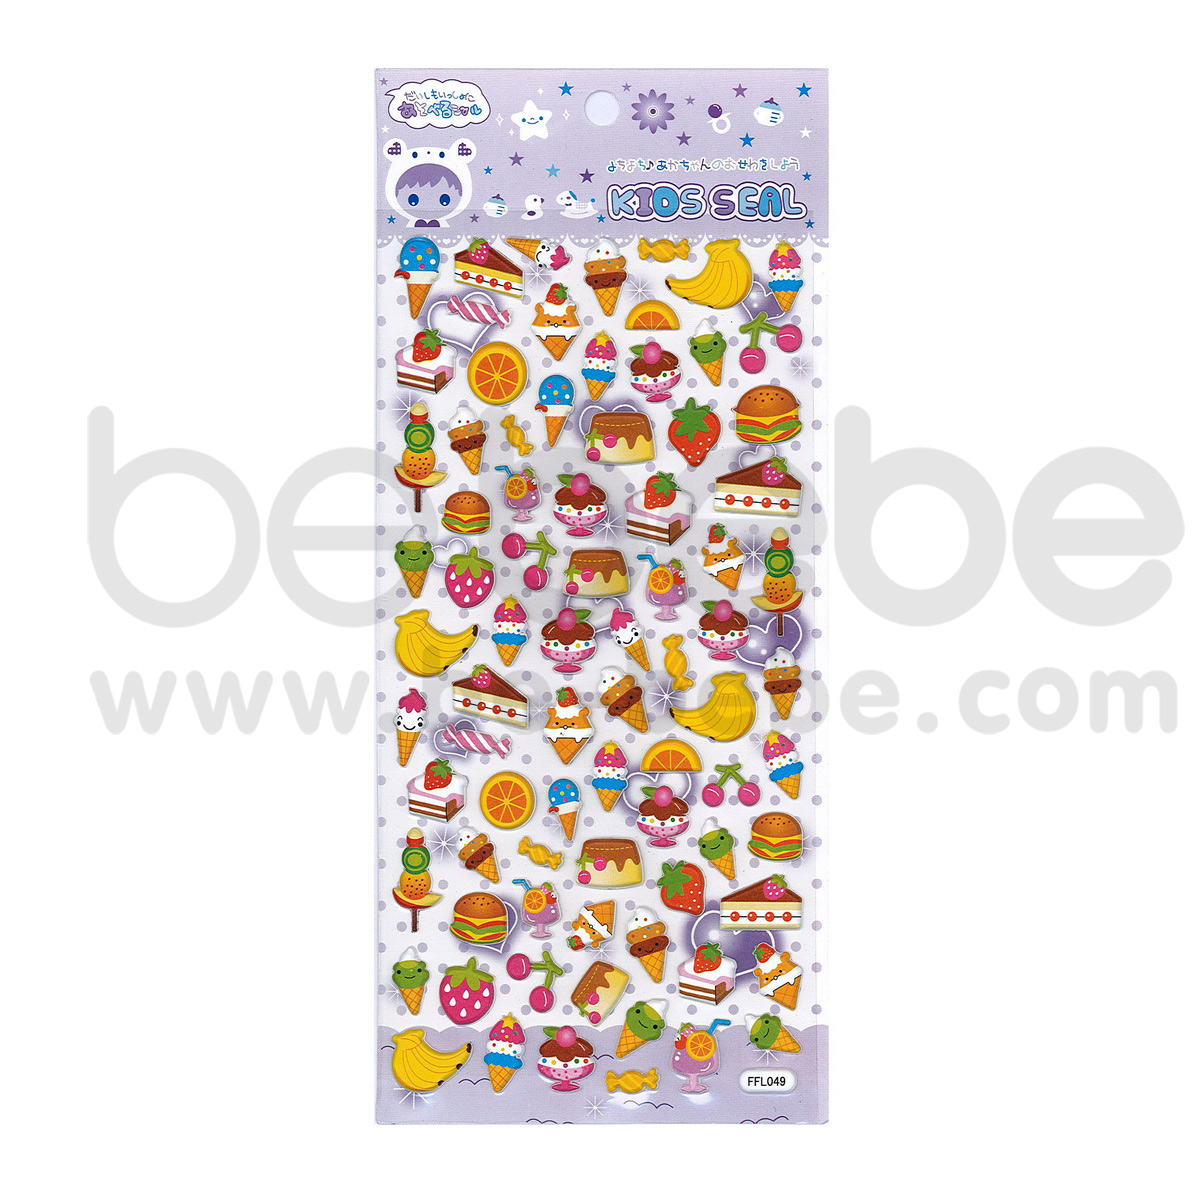 be bebe : Puffy Sticker (8.5x17cm.) / FFL-049